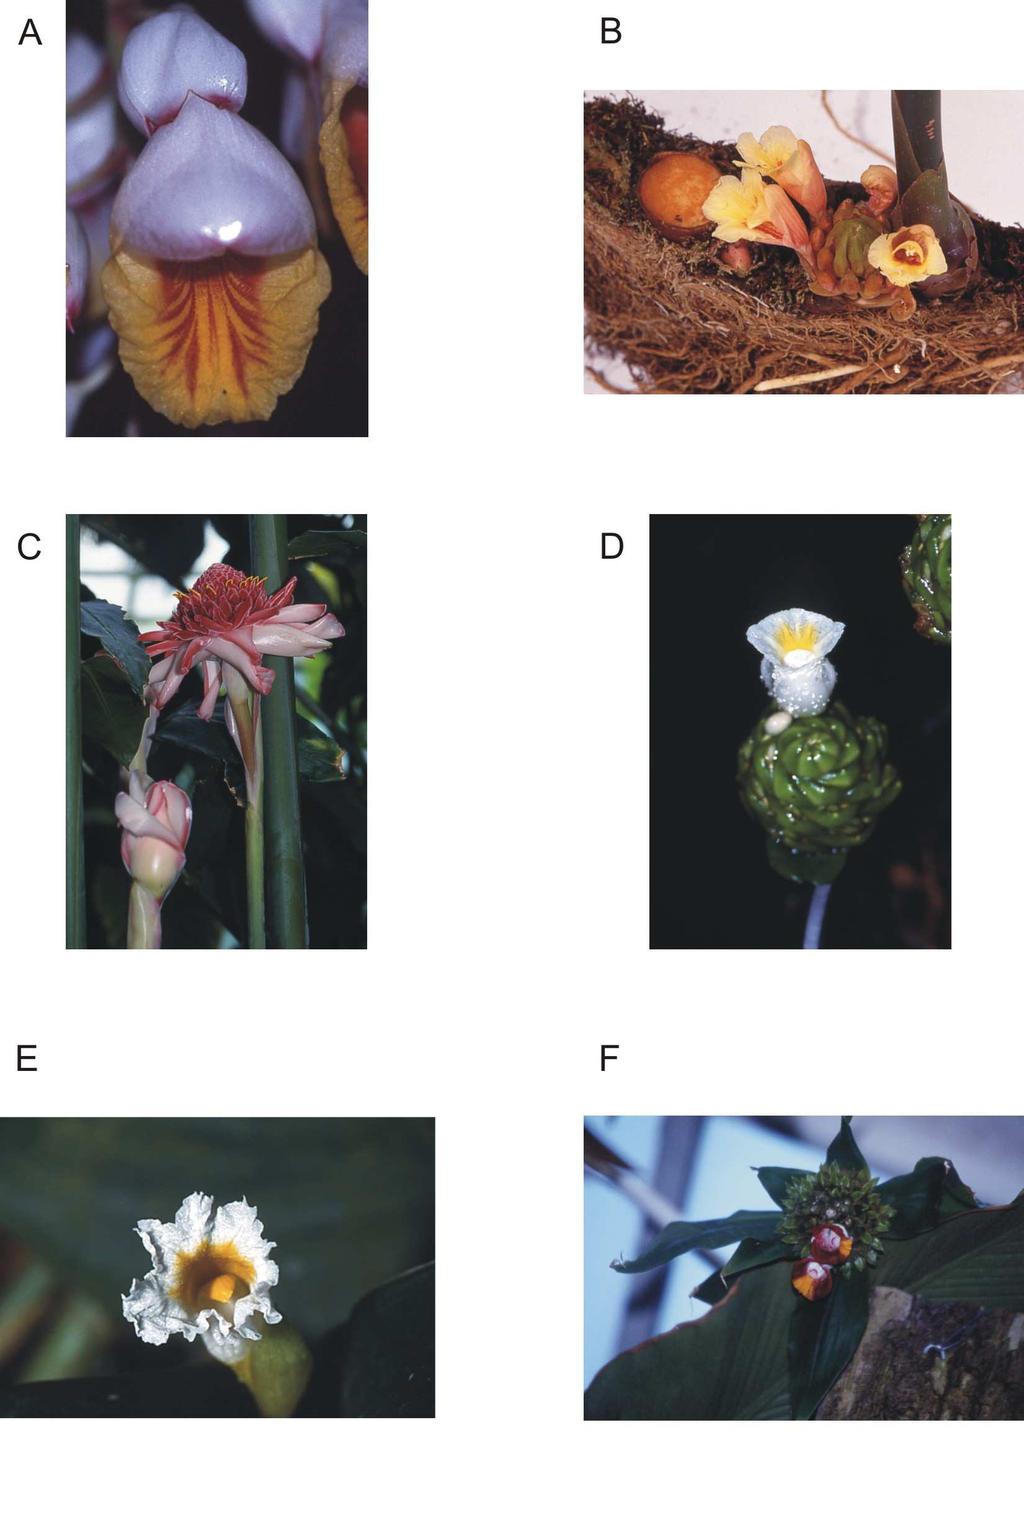 Tafel A7: A-C Zingiberaceae (Alpinieae), D-F Costaceae A Alpinia zerumbet C Etlingera